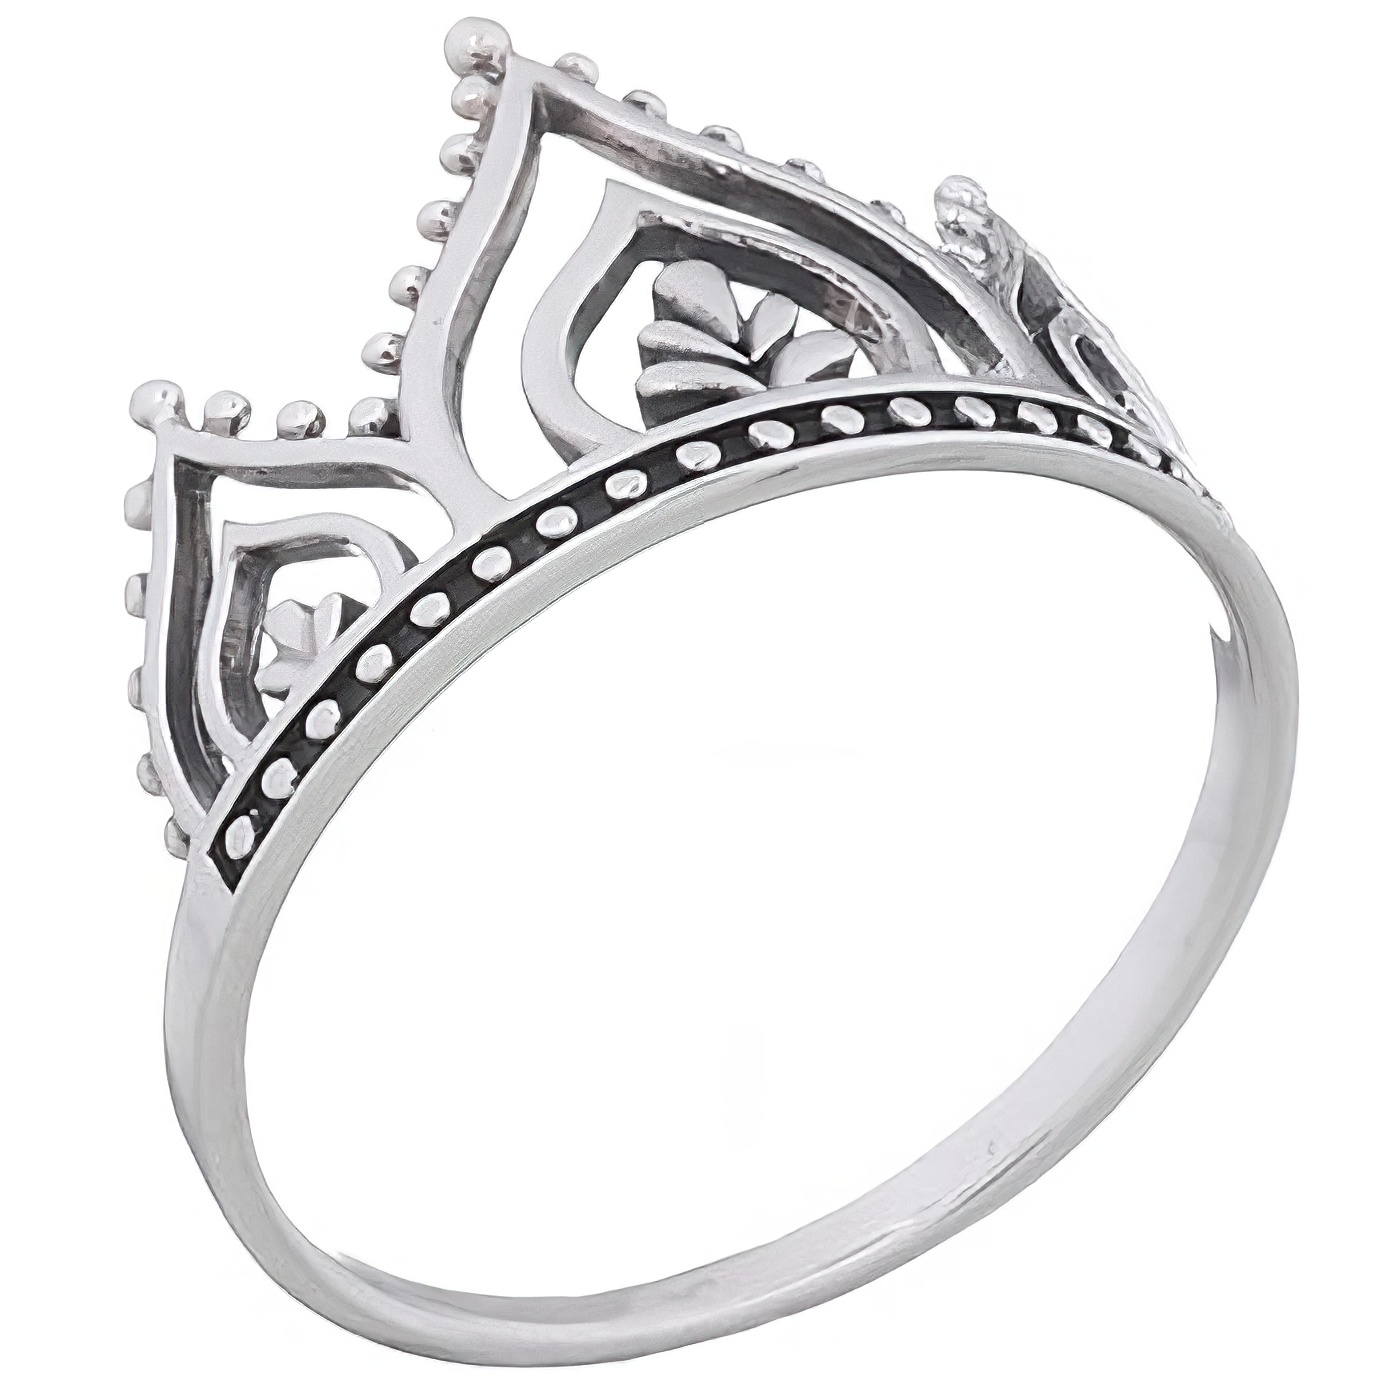 Henna Petals Crown 925 Silver Ring by BeYindi 